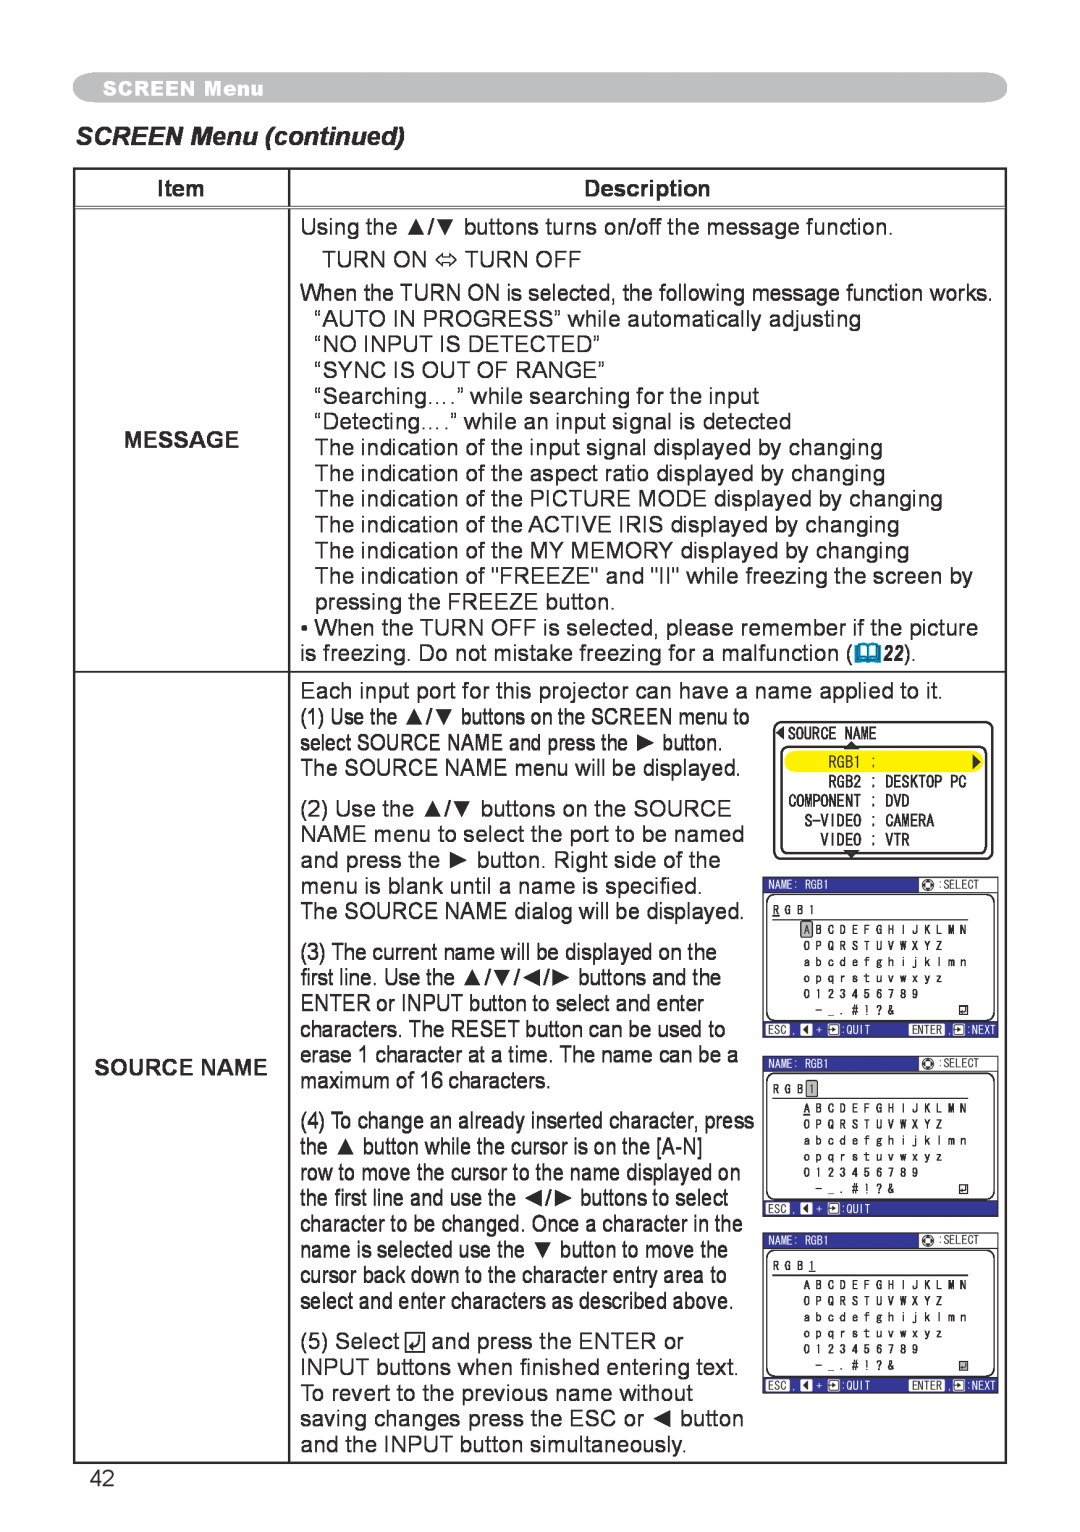 Hitachi CP-X608 user manual SCREEN Menu continued, Description, Message, Source Name 